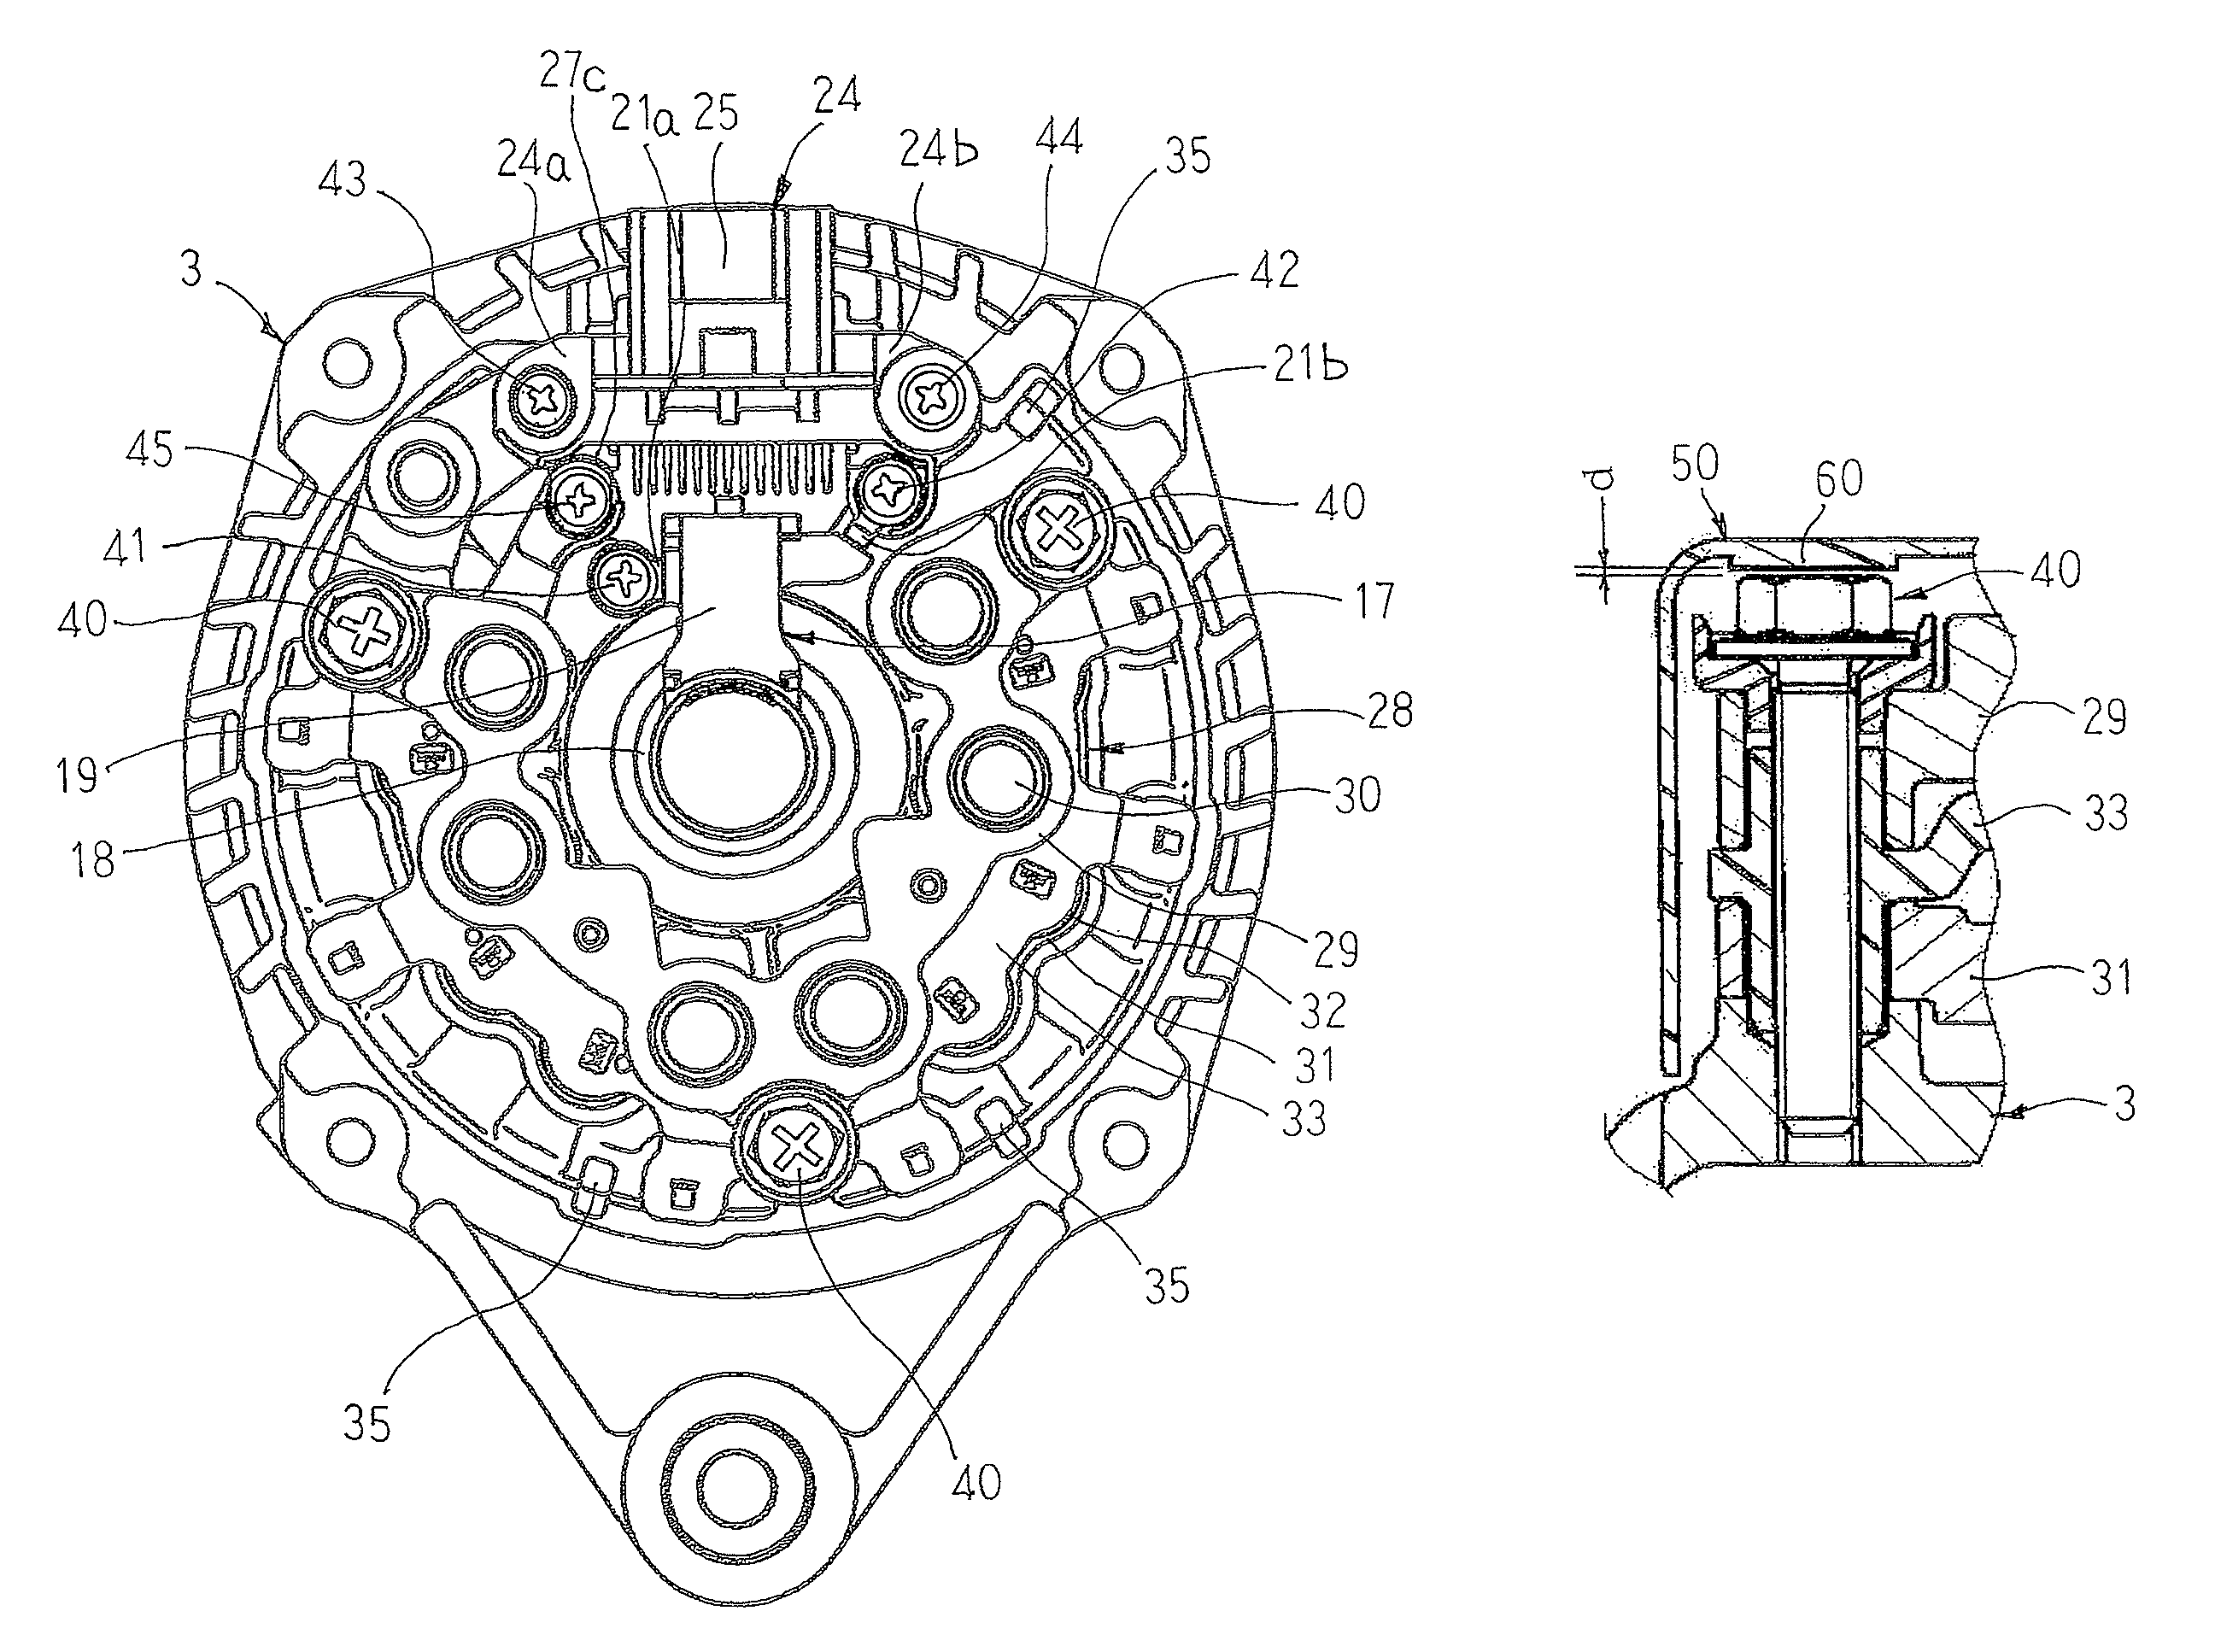 Automotive rotary electric machine